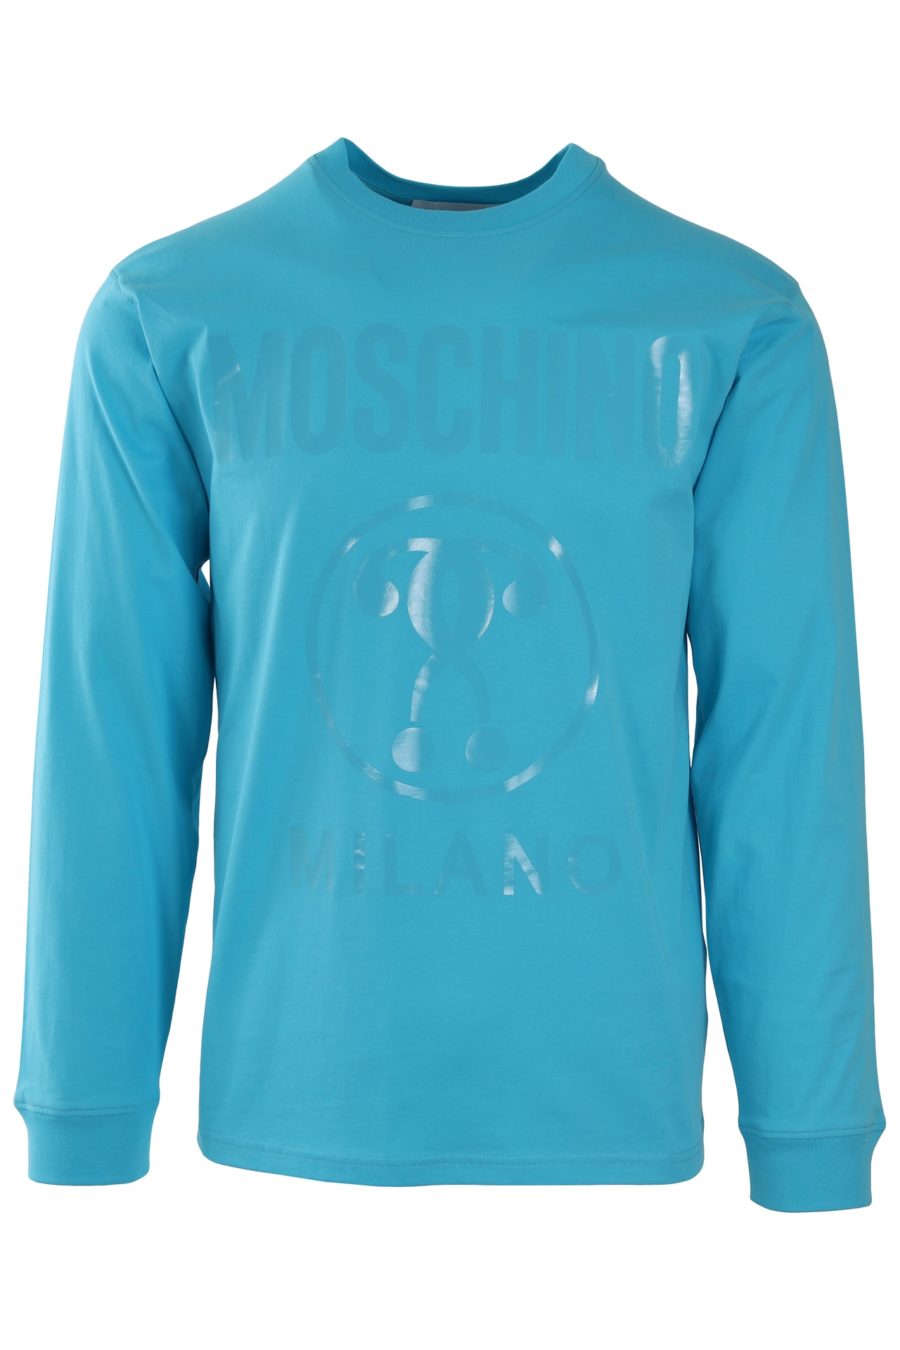 Camiseta de manga larga Moschino Couture azul celeste - a1aafb433286aff720dbc1bb734918b5bc61f109